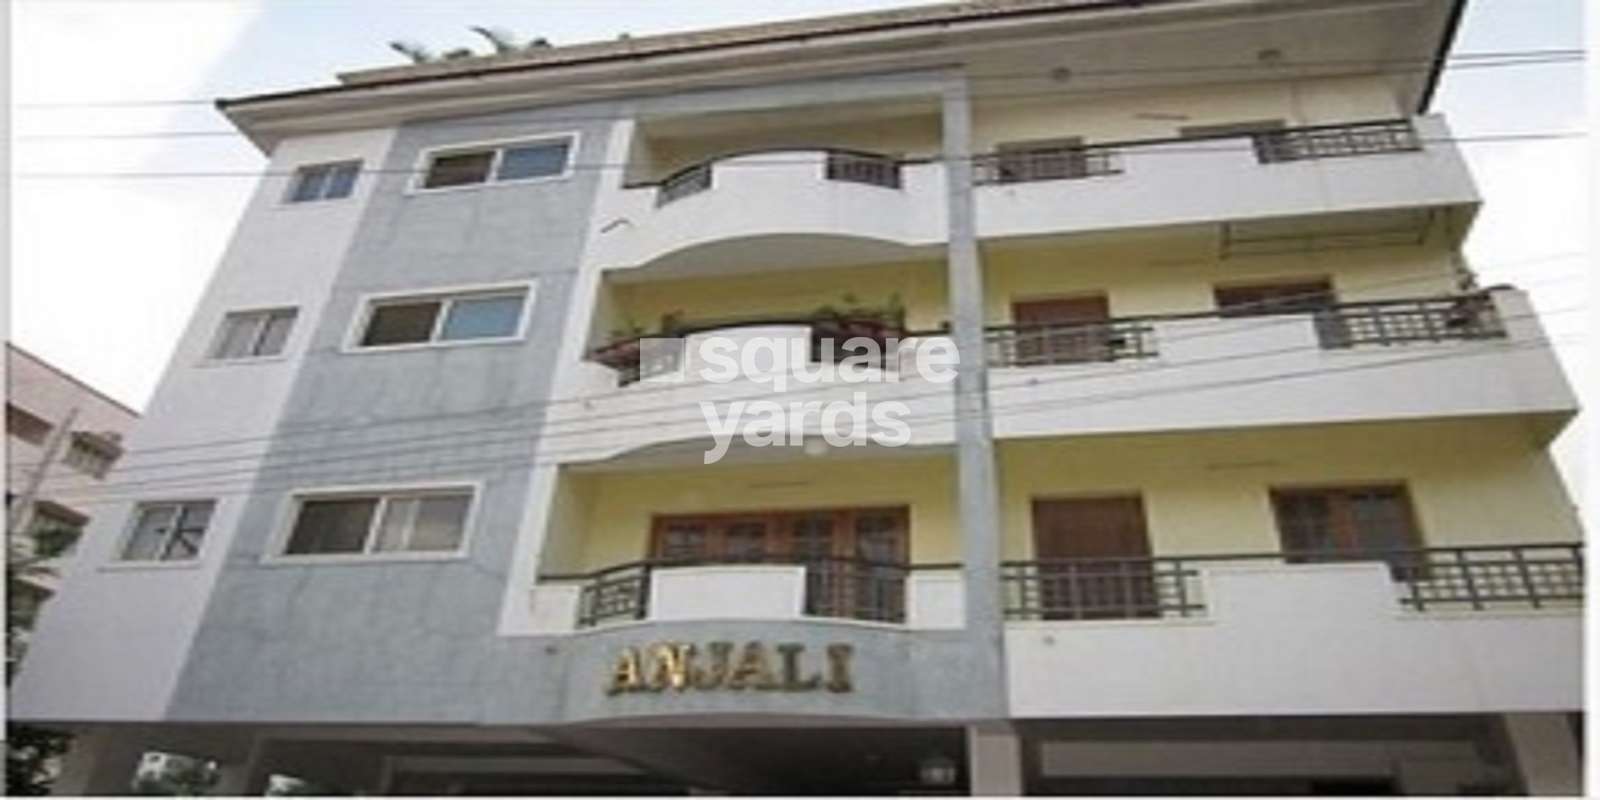 Anjali Apartments Basavanagudi Cover Image